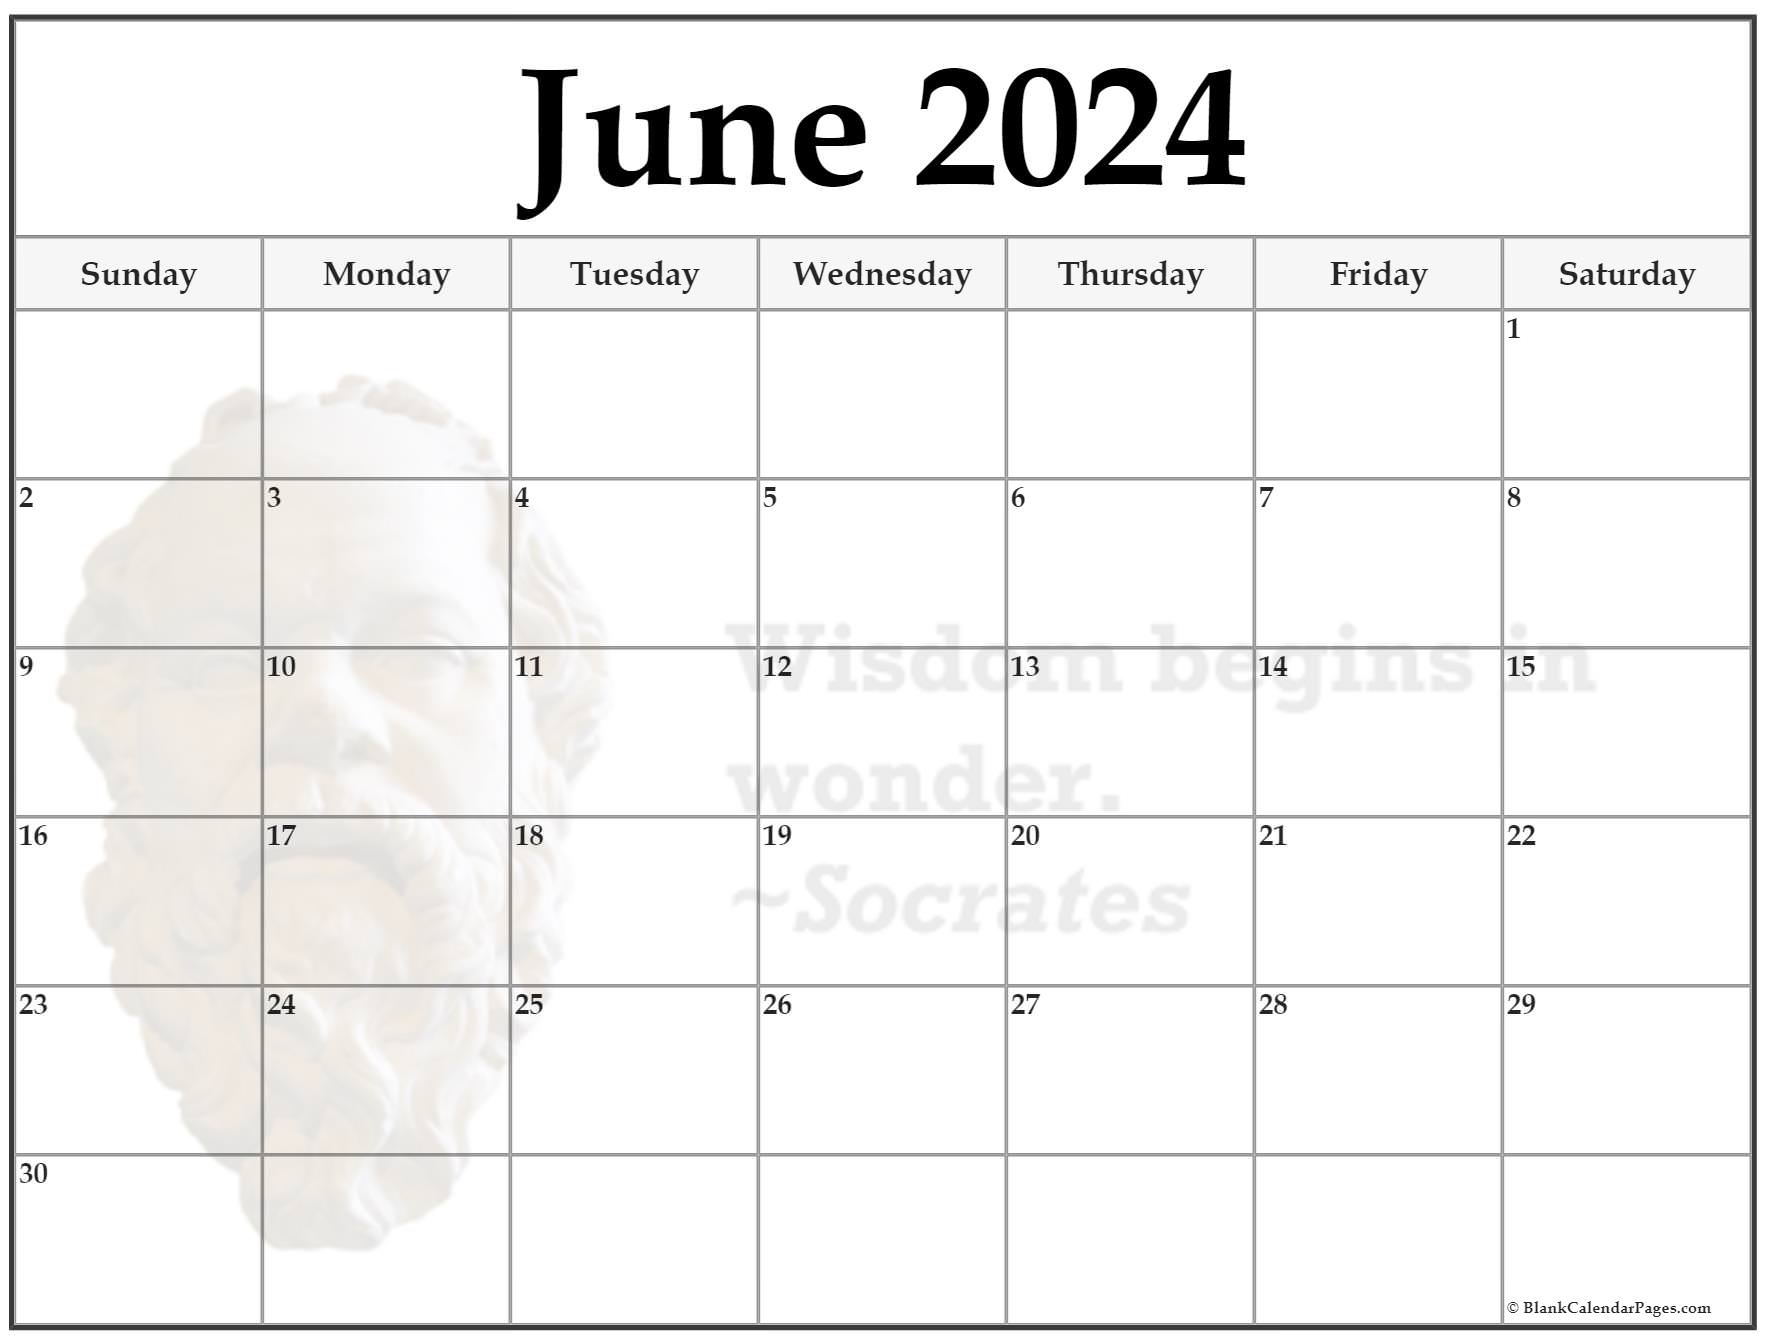 Лунный календарь на июнь 2024г. June 2023 календарь. Планер на июнь 2023 года. Календарь июнь 2023. Календарь на июнь 2023 года.